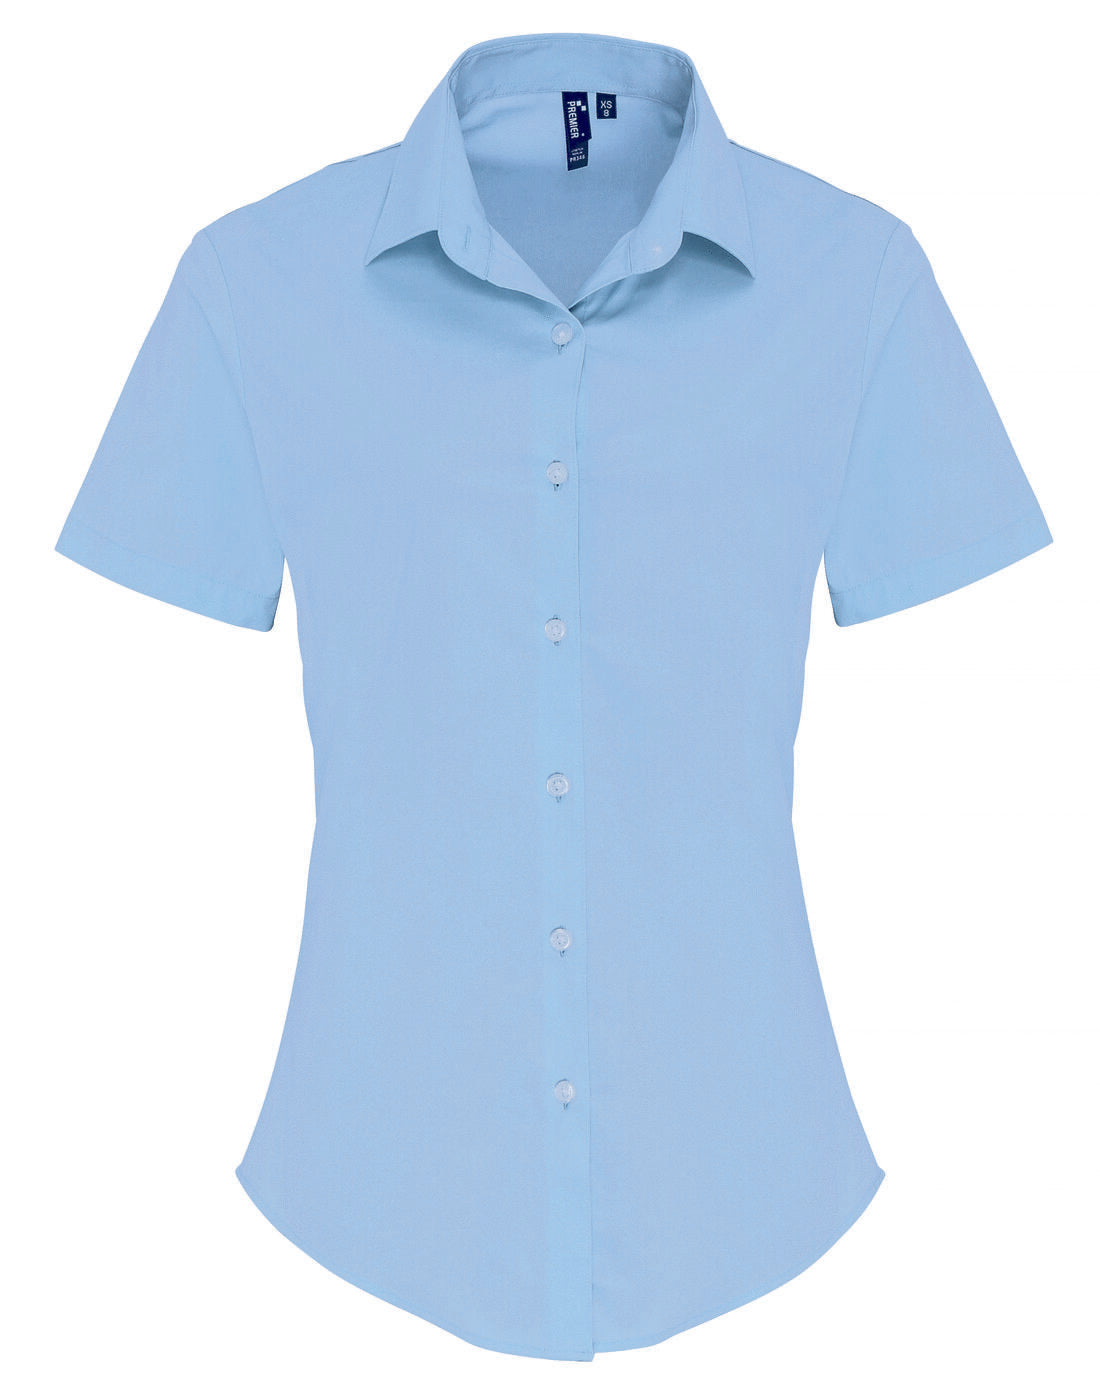 Premier Women's Stretch-Fit Cotton Poplin Short Sleeve Shirt